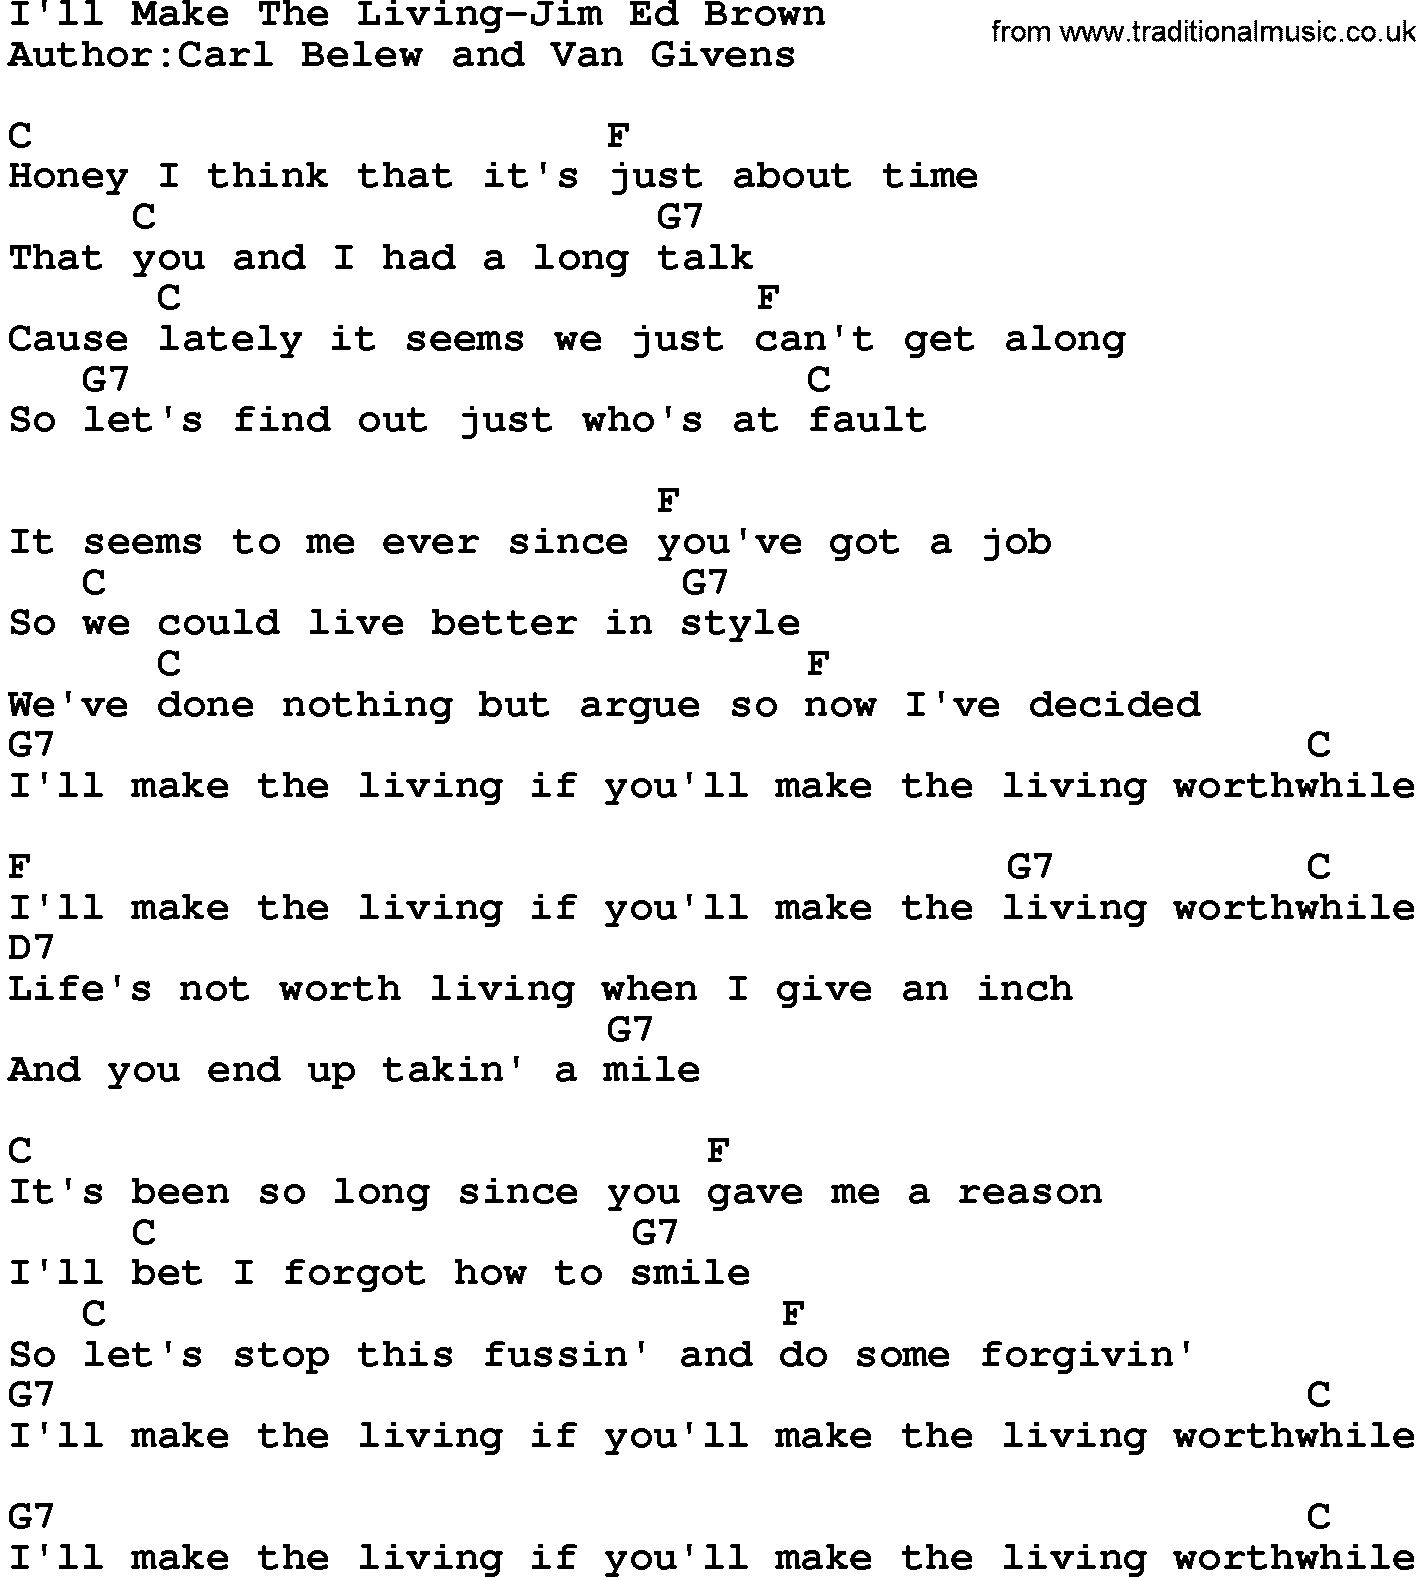 Country music song: I'll Make The Living-Jim Ed Brown lyrics and chords